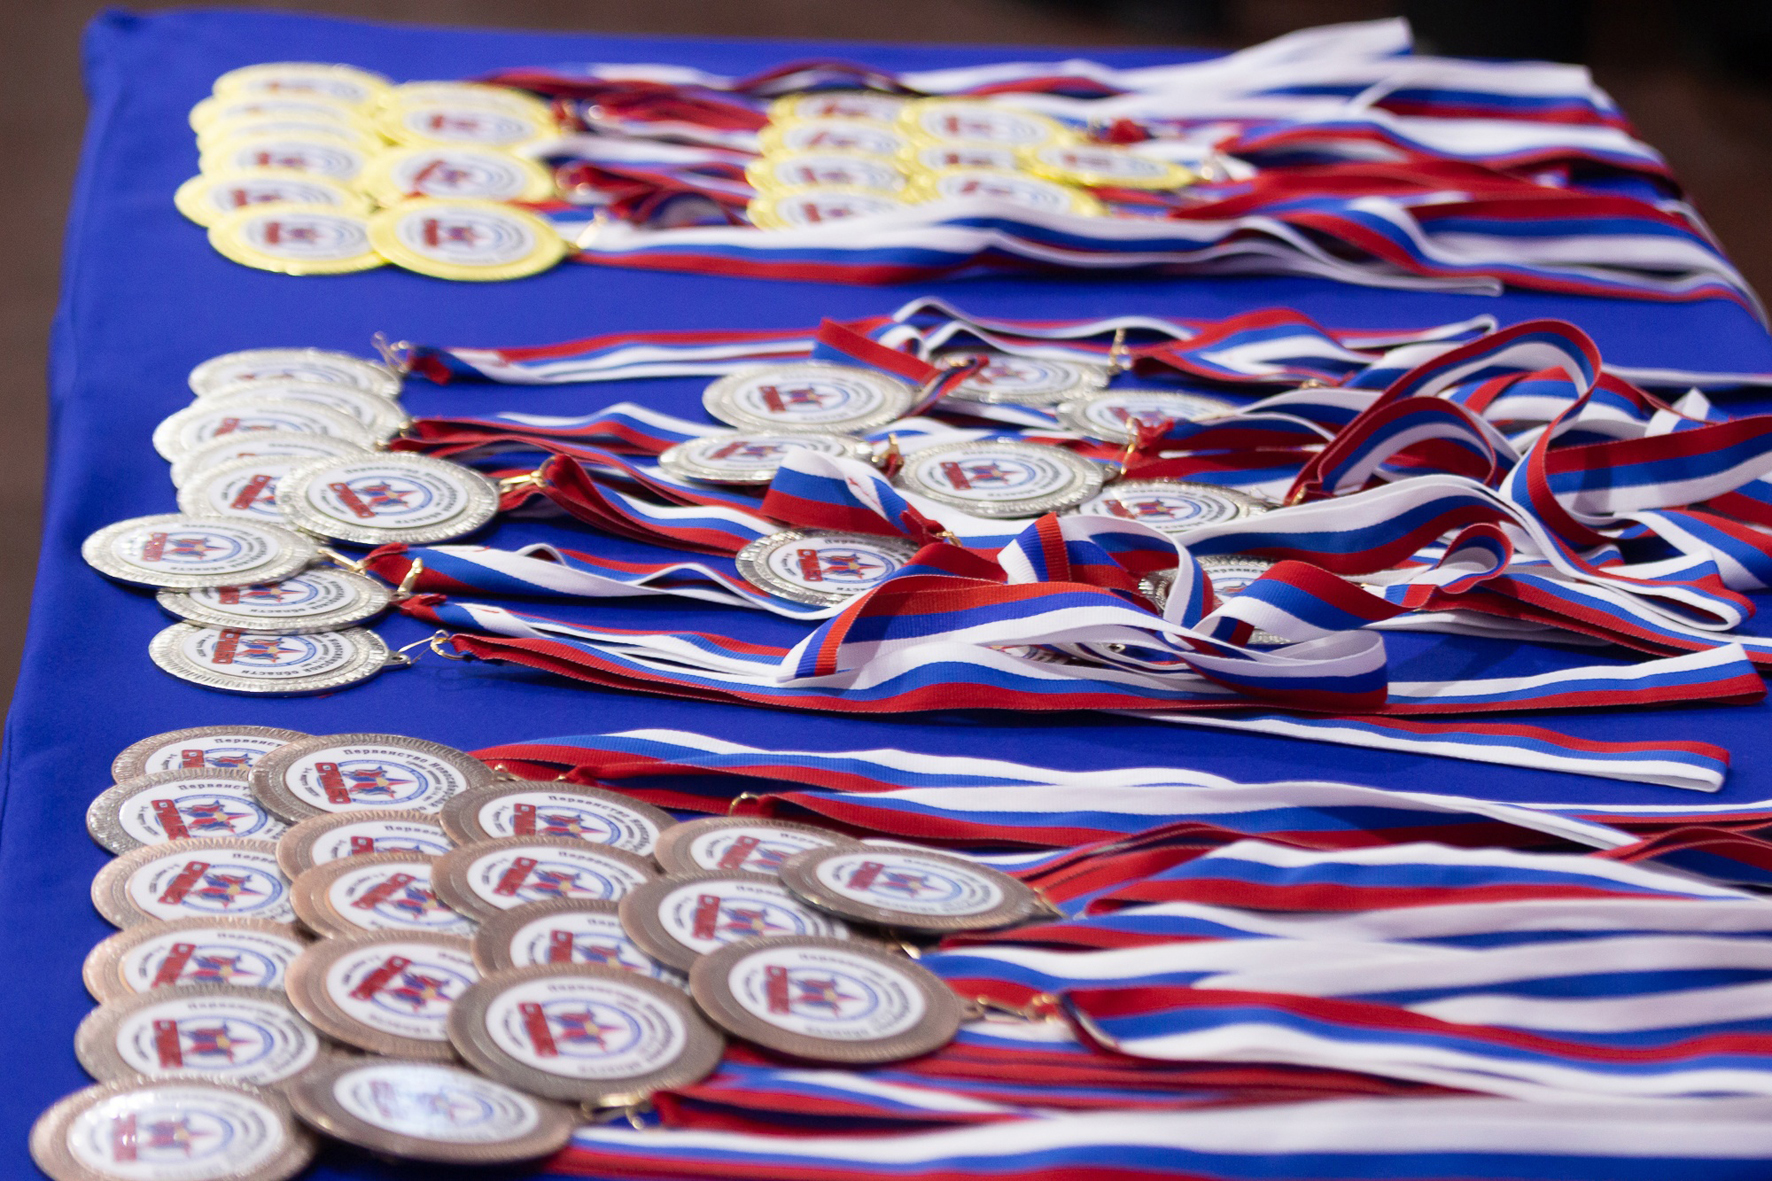 Медали турнира